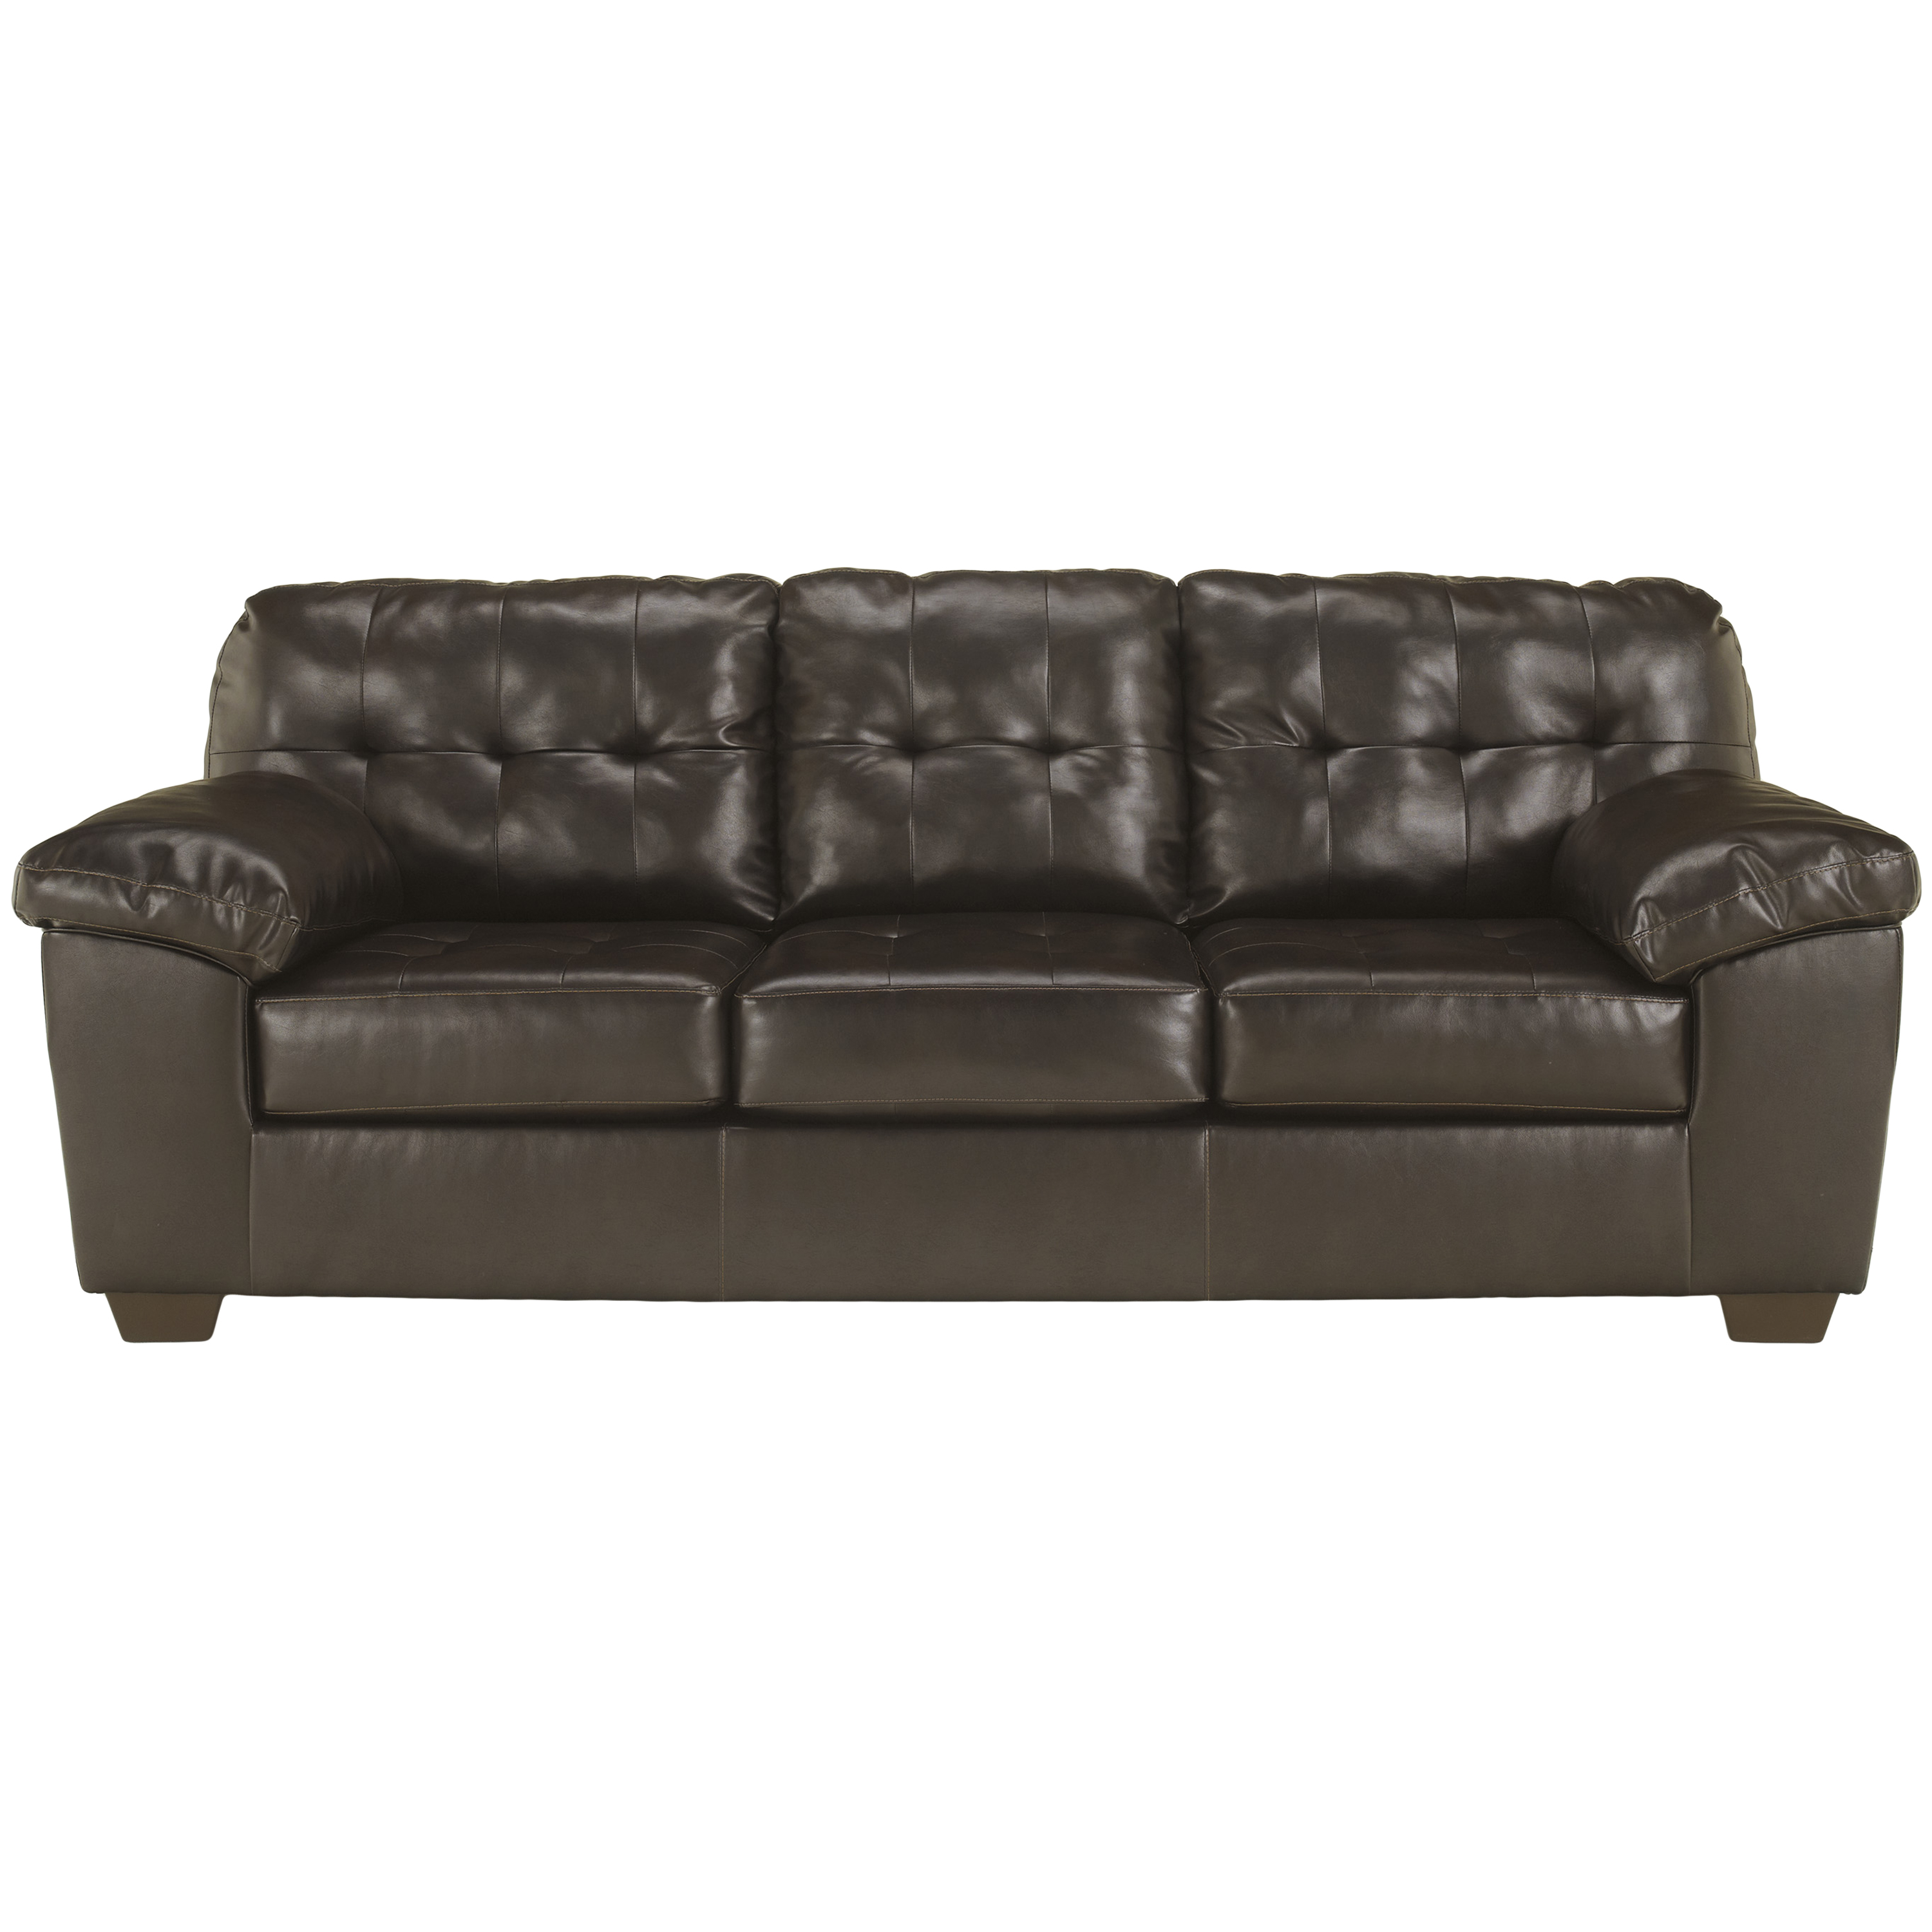 Flash Furniture Signature Design by Ashley Alliston Sofa in Chocolate Faux Leather - image 1 of 2